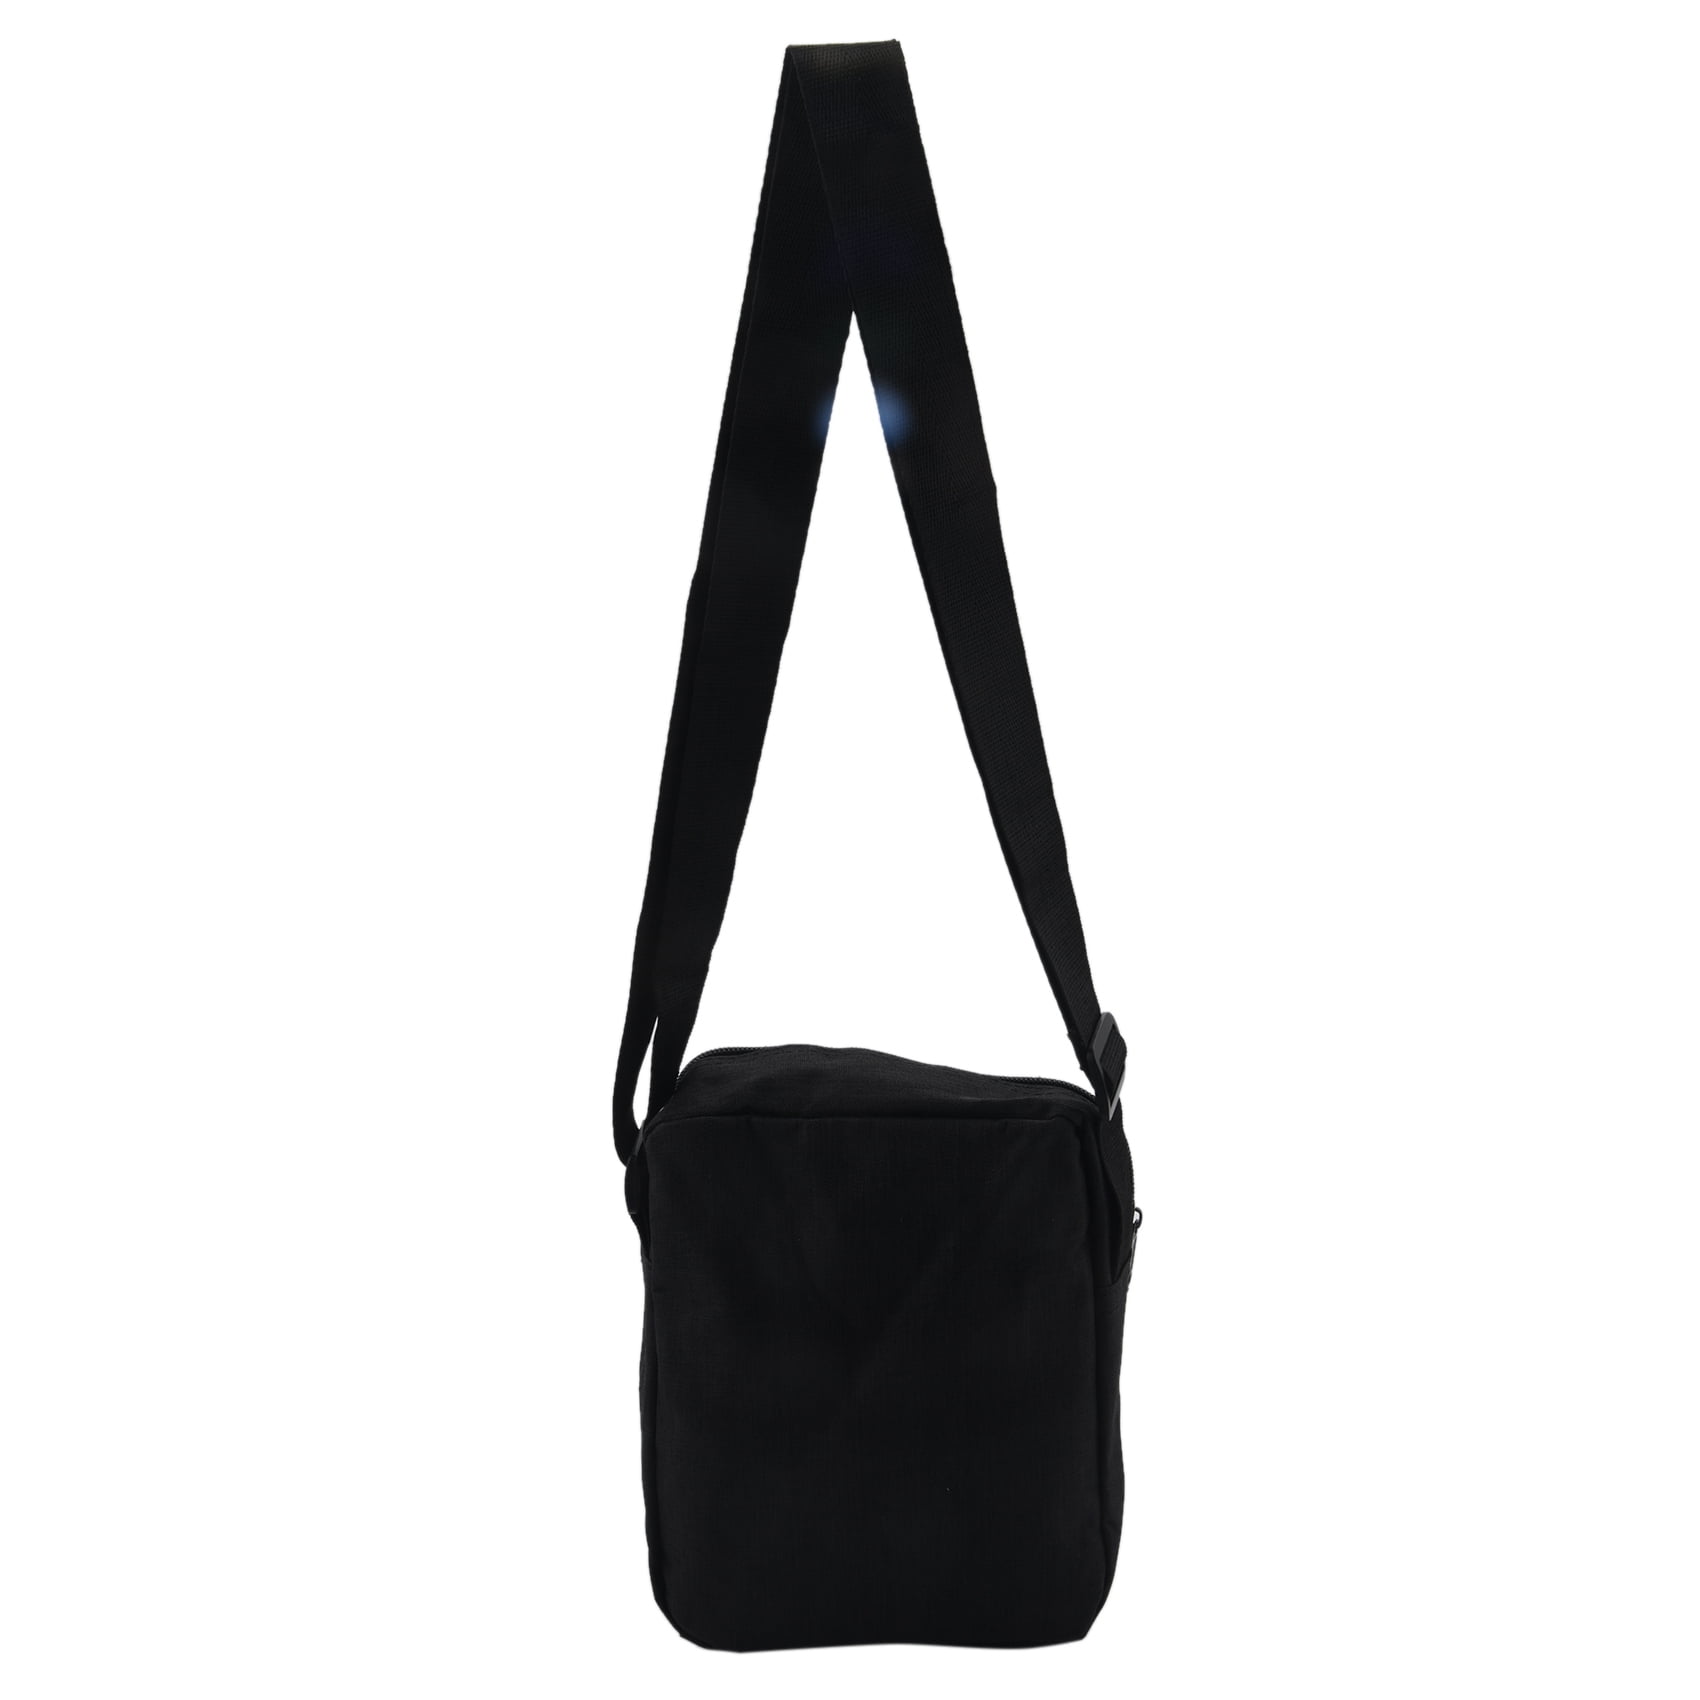 WEPLAN Crossbody Bag for Men, mini man purse,Travel Messenger Shoulder Bag  for Men, Small Side Bags for Mens